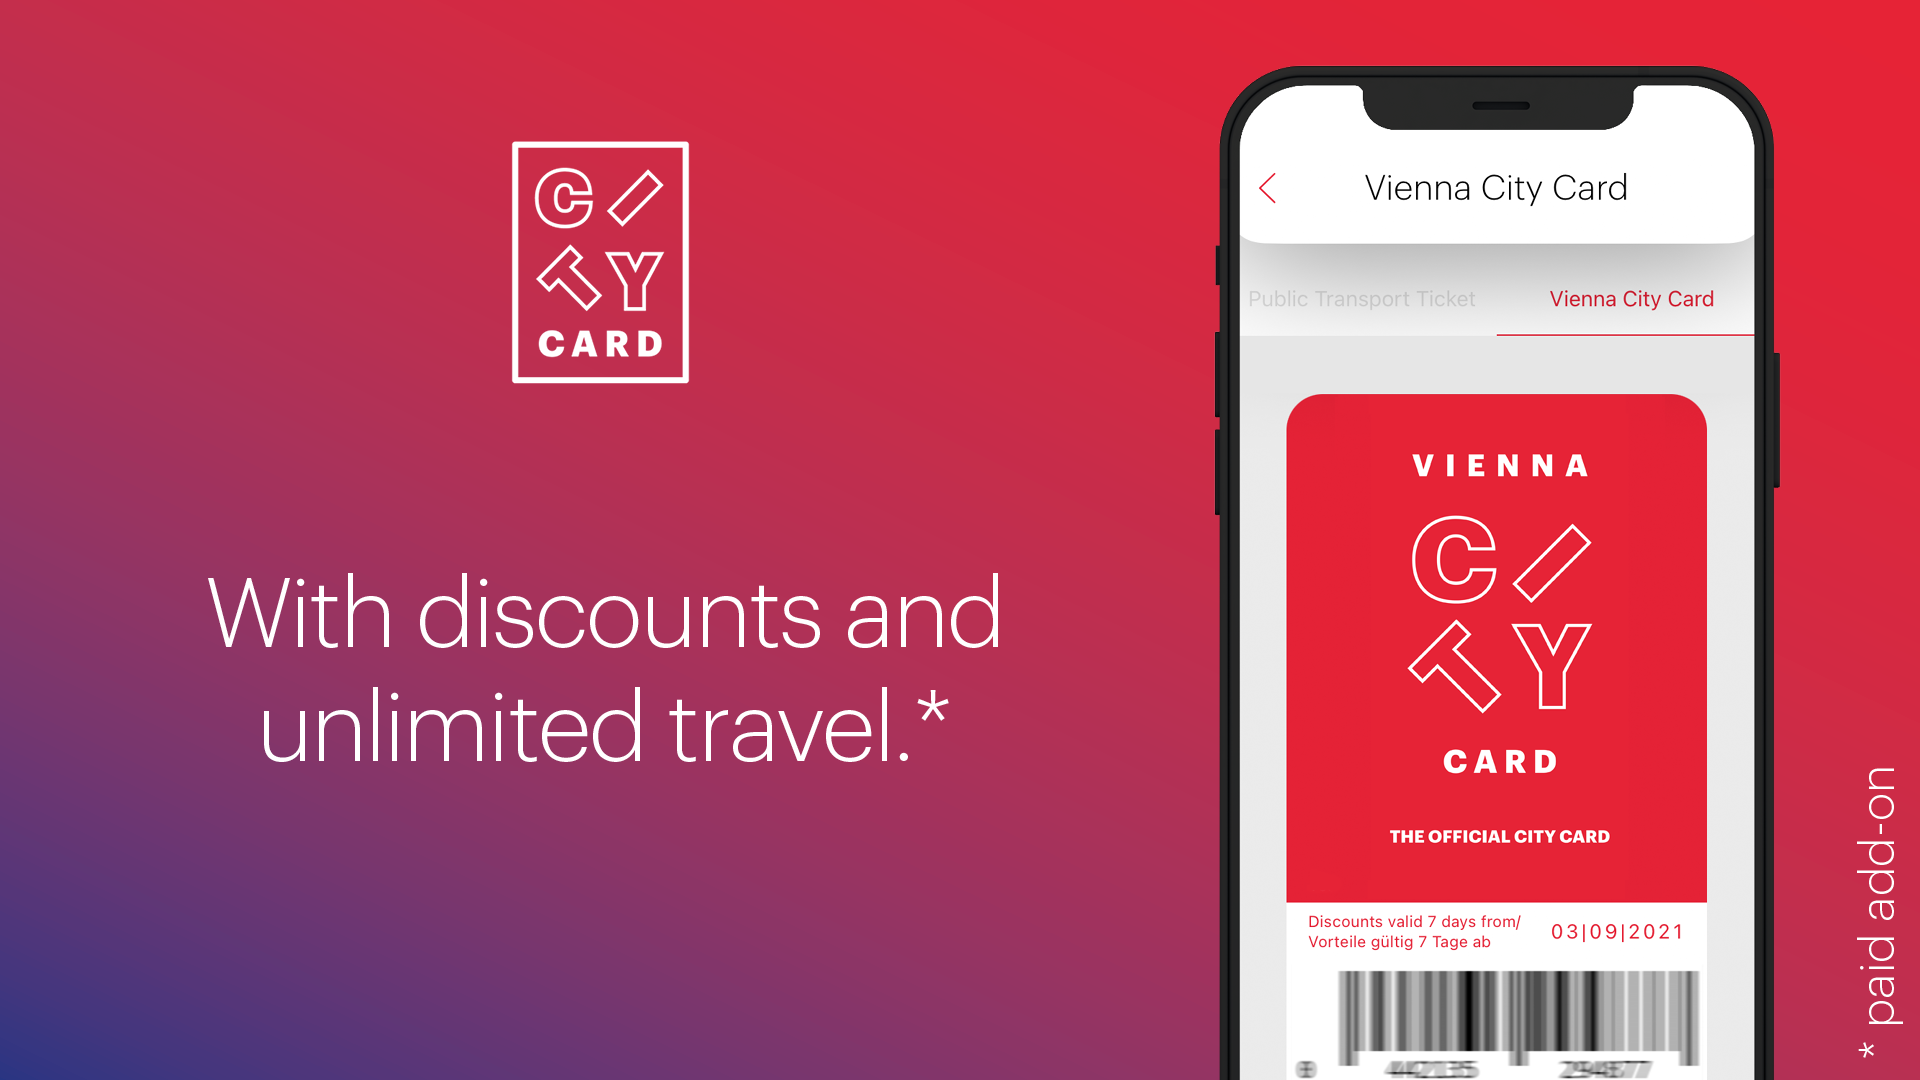 ivie観光ガイドアプリ - Vienna City Card